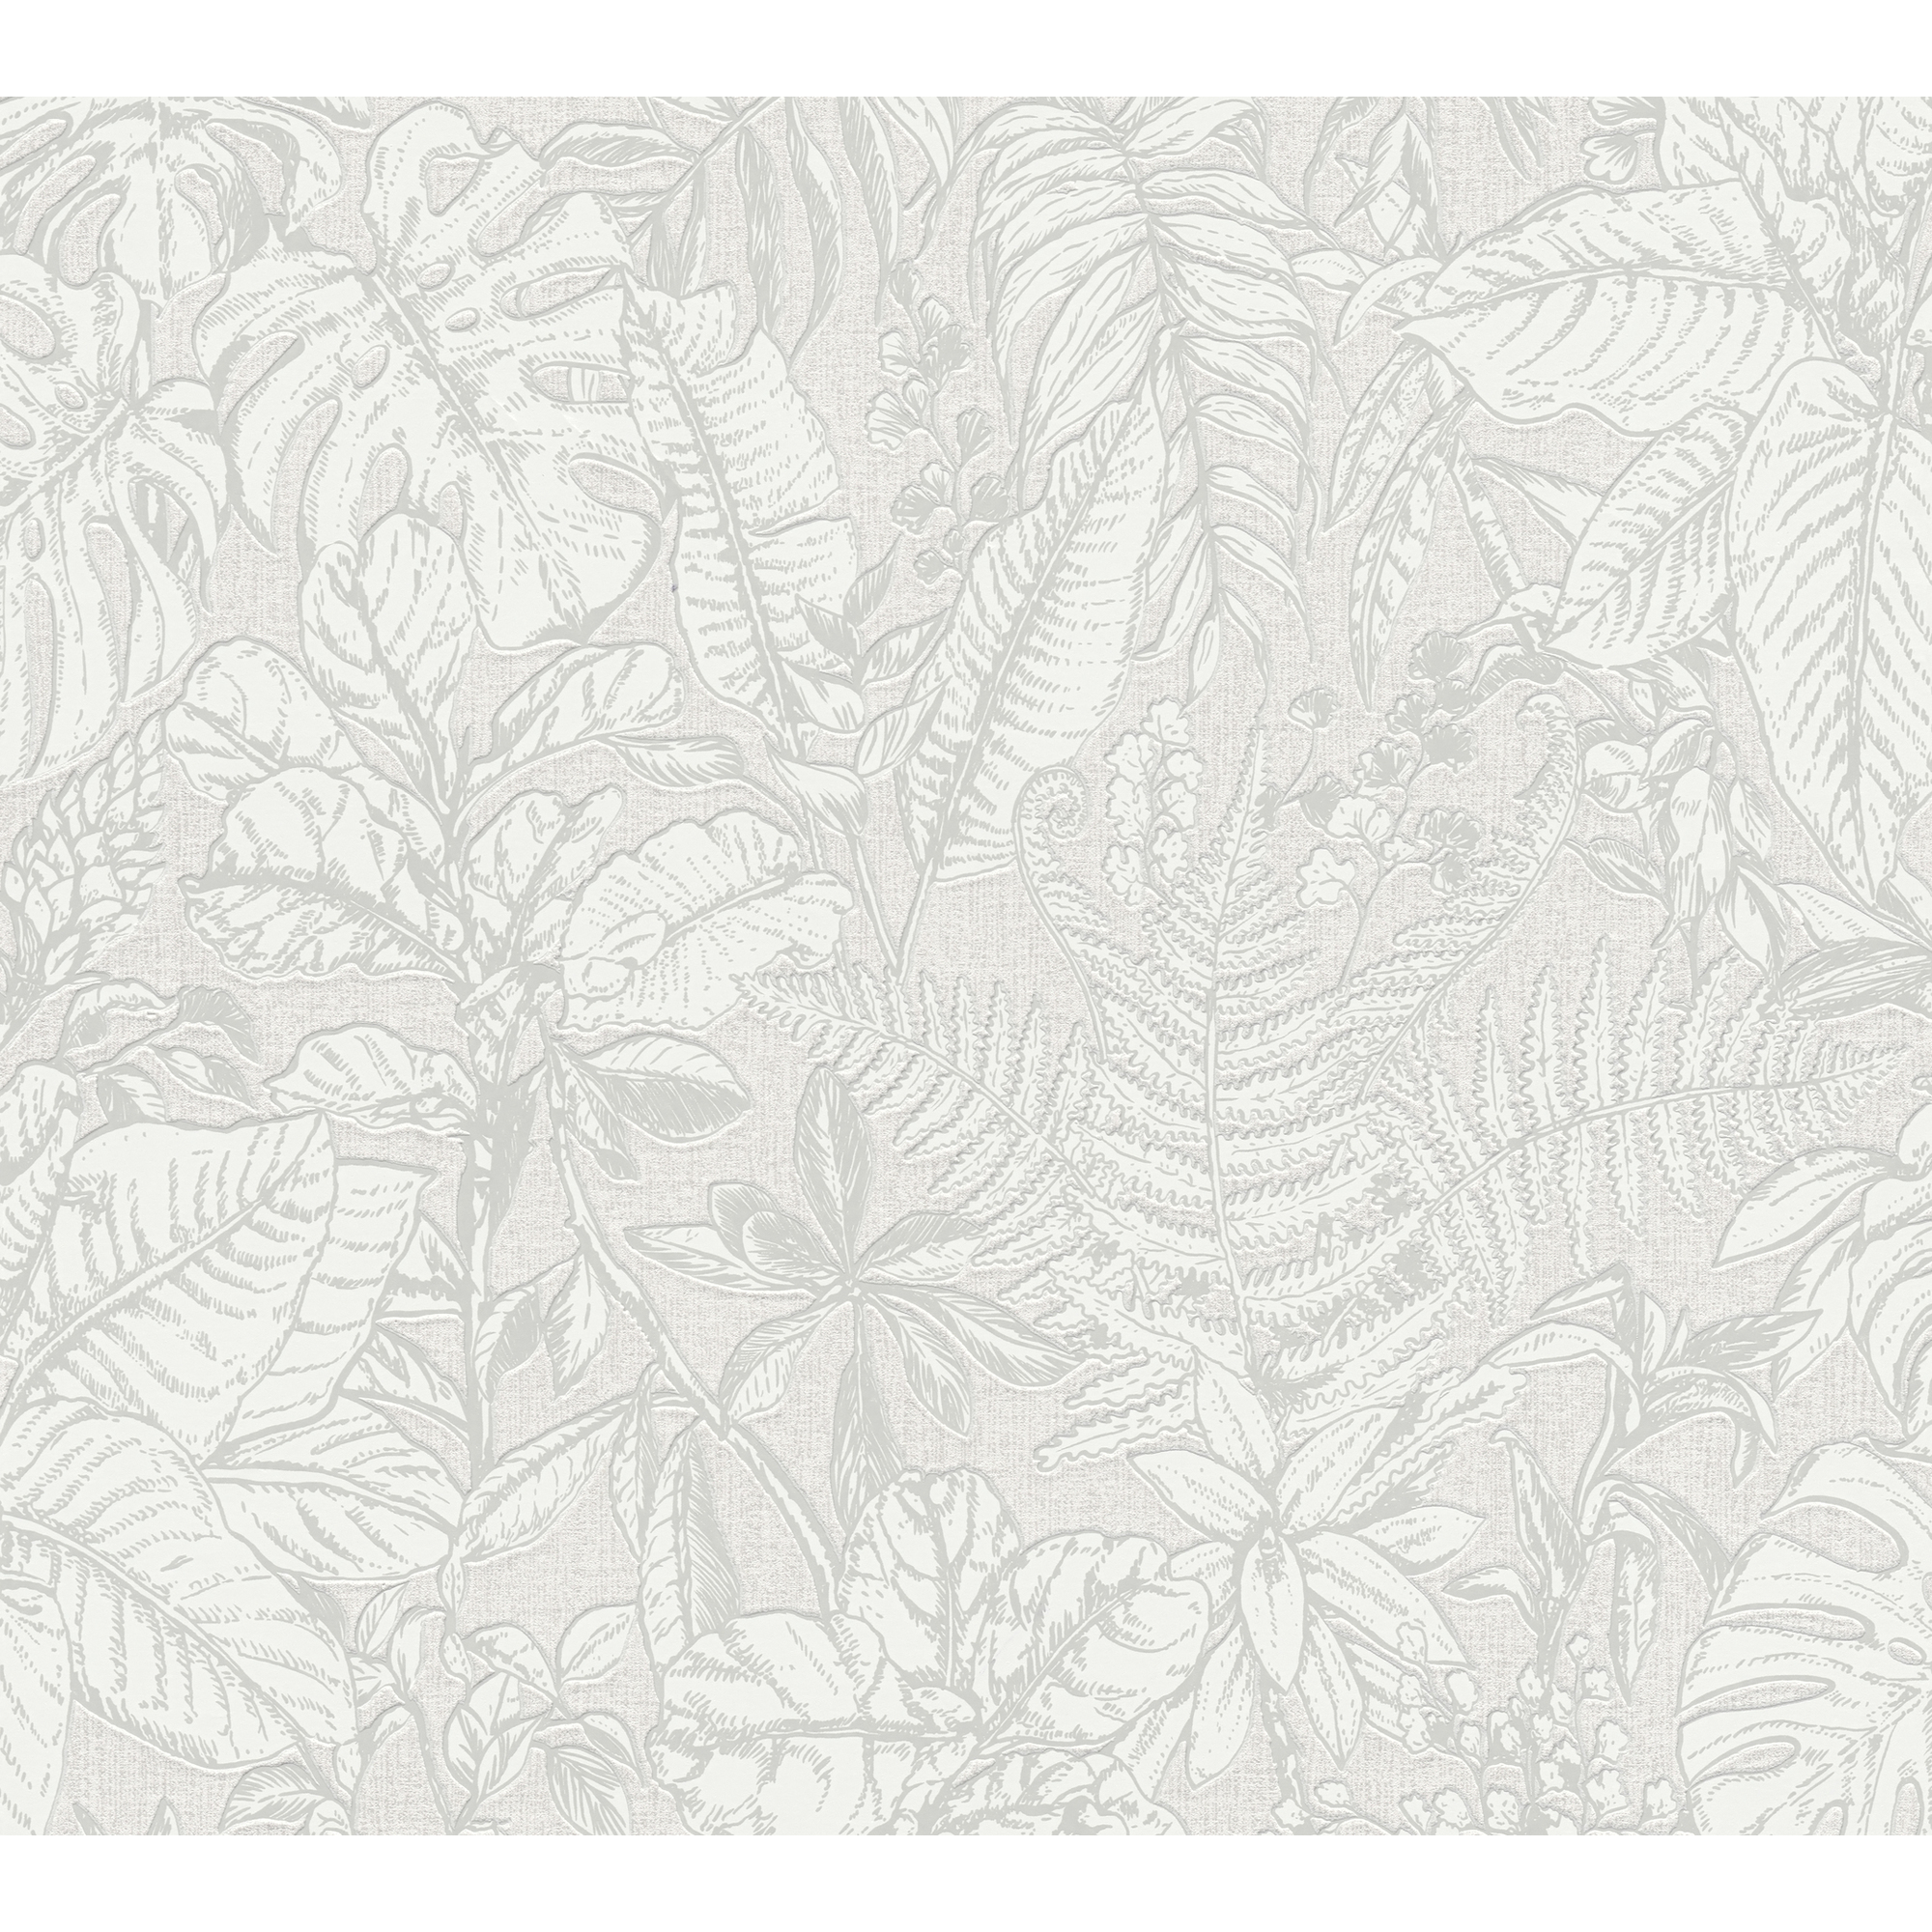 Vliestapete 'Daniel Hechter 6' Dschungel weiß/grau 53 x 1005 cm + product picture